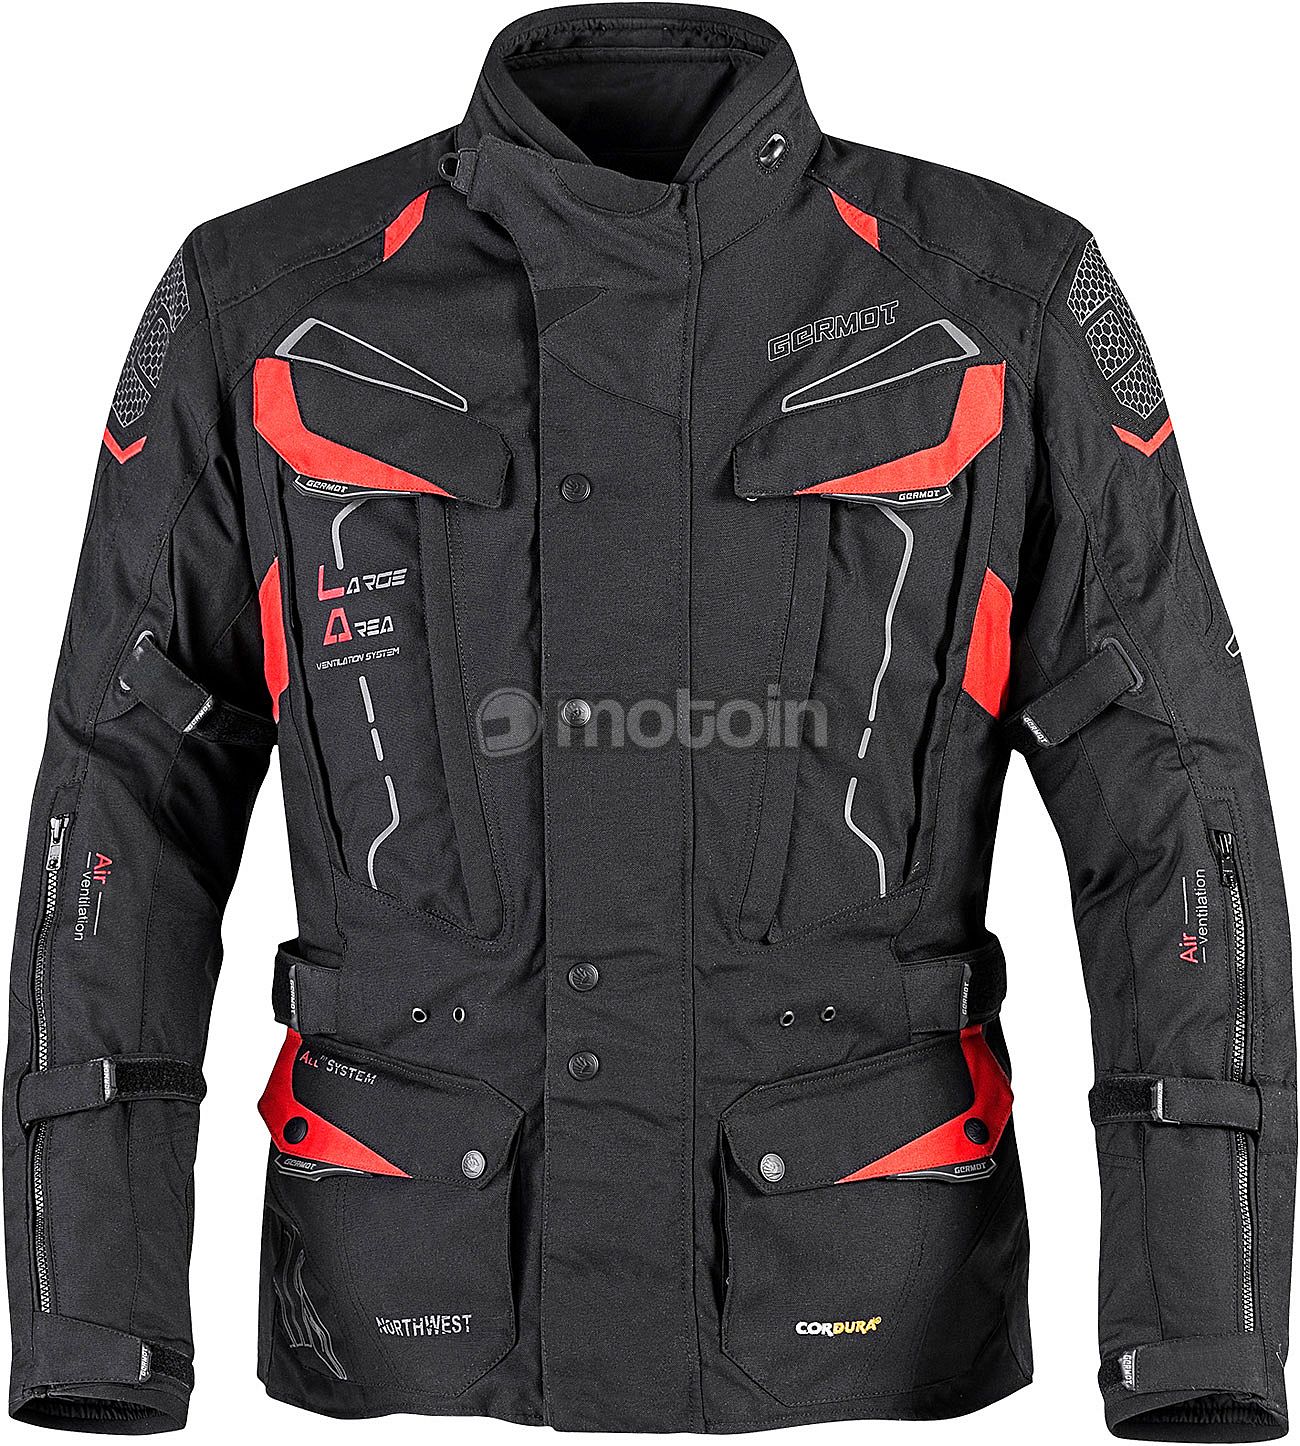 Germot NorthWest, textile jacket waterproof